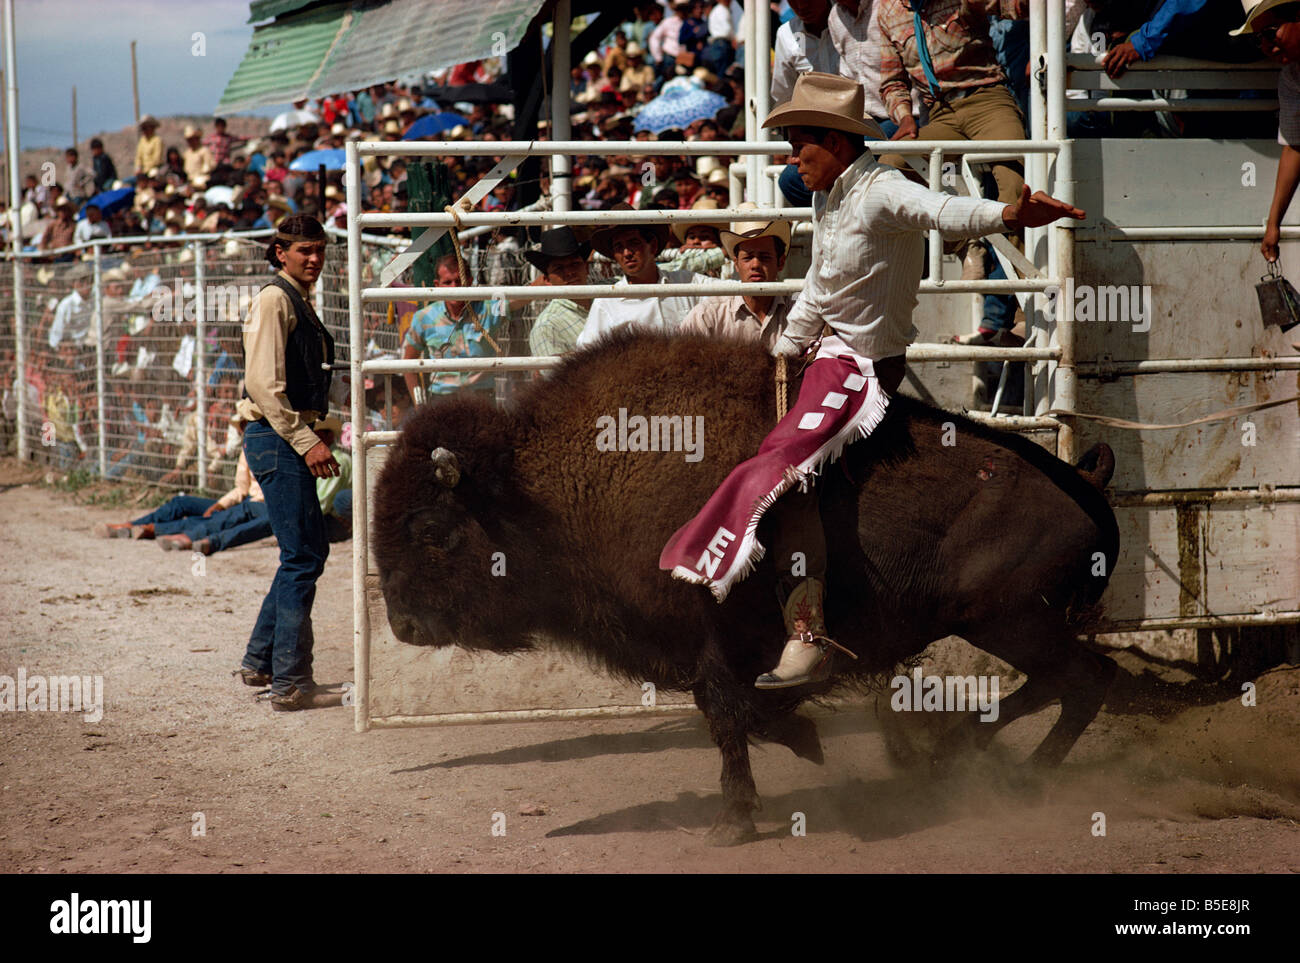 Rodeo caballo, Gallup, Nuevo México, Estados Unidos, América del Norte Foto de stock